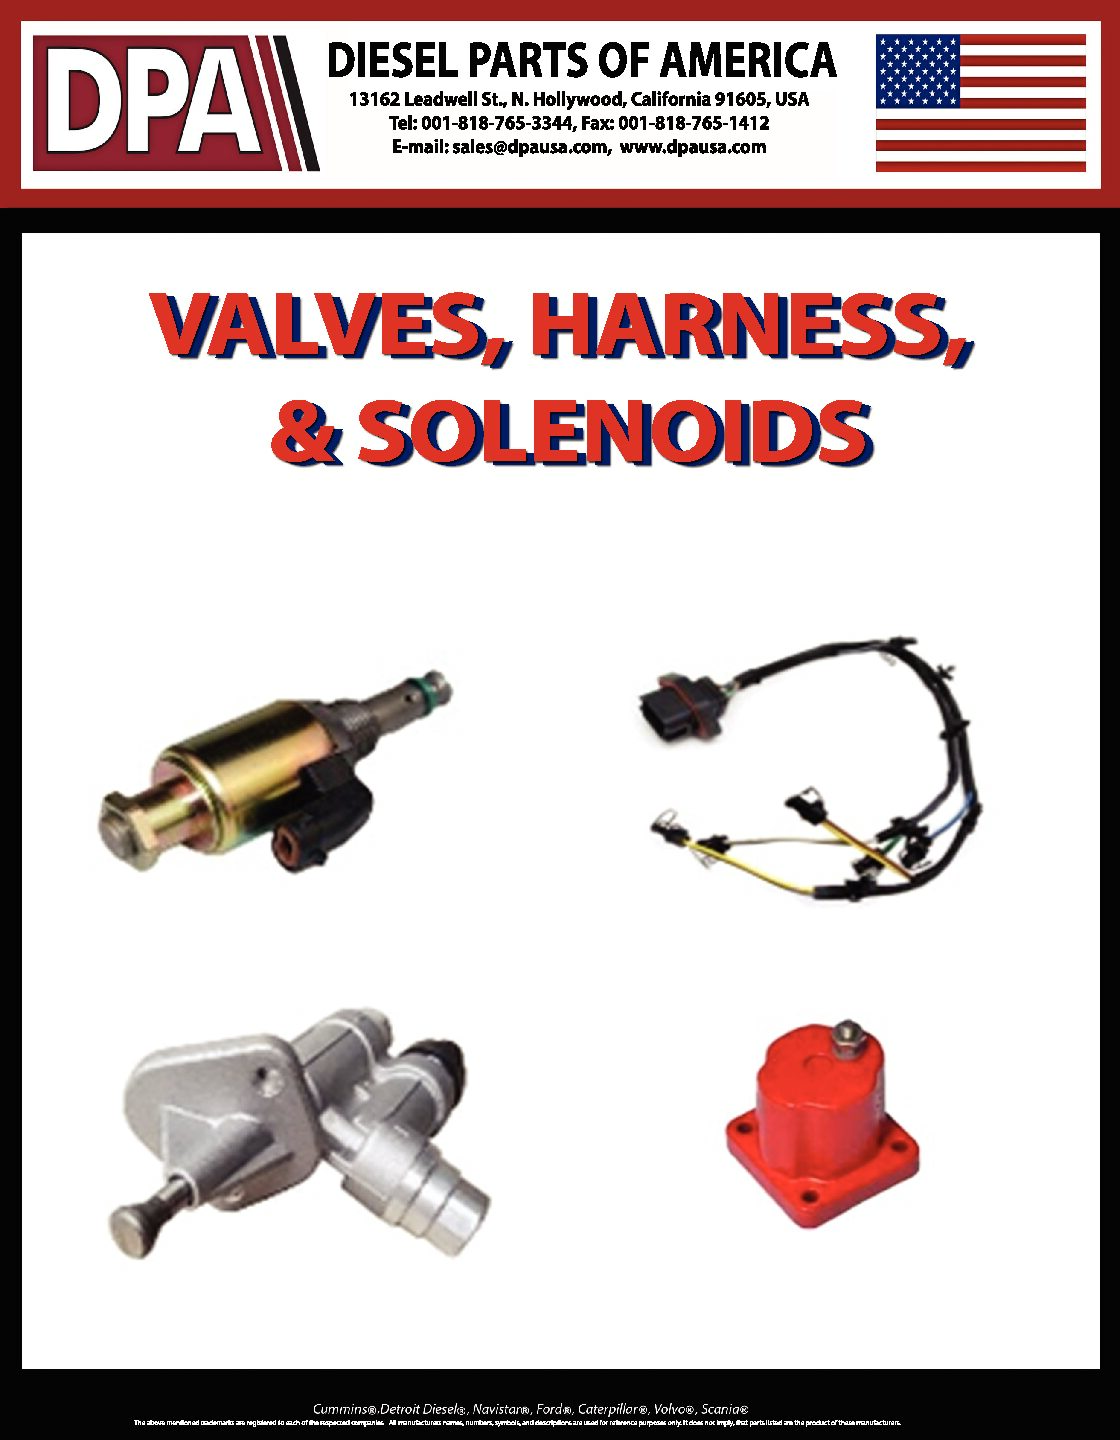 dpa_valves_harnesss_solenoids-pdf.jpg